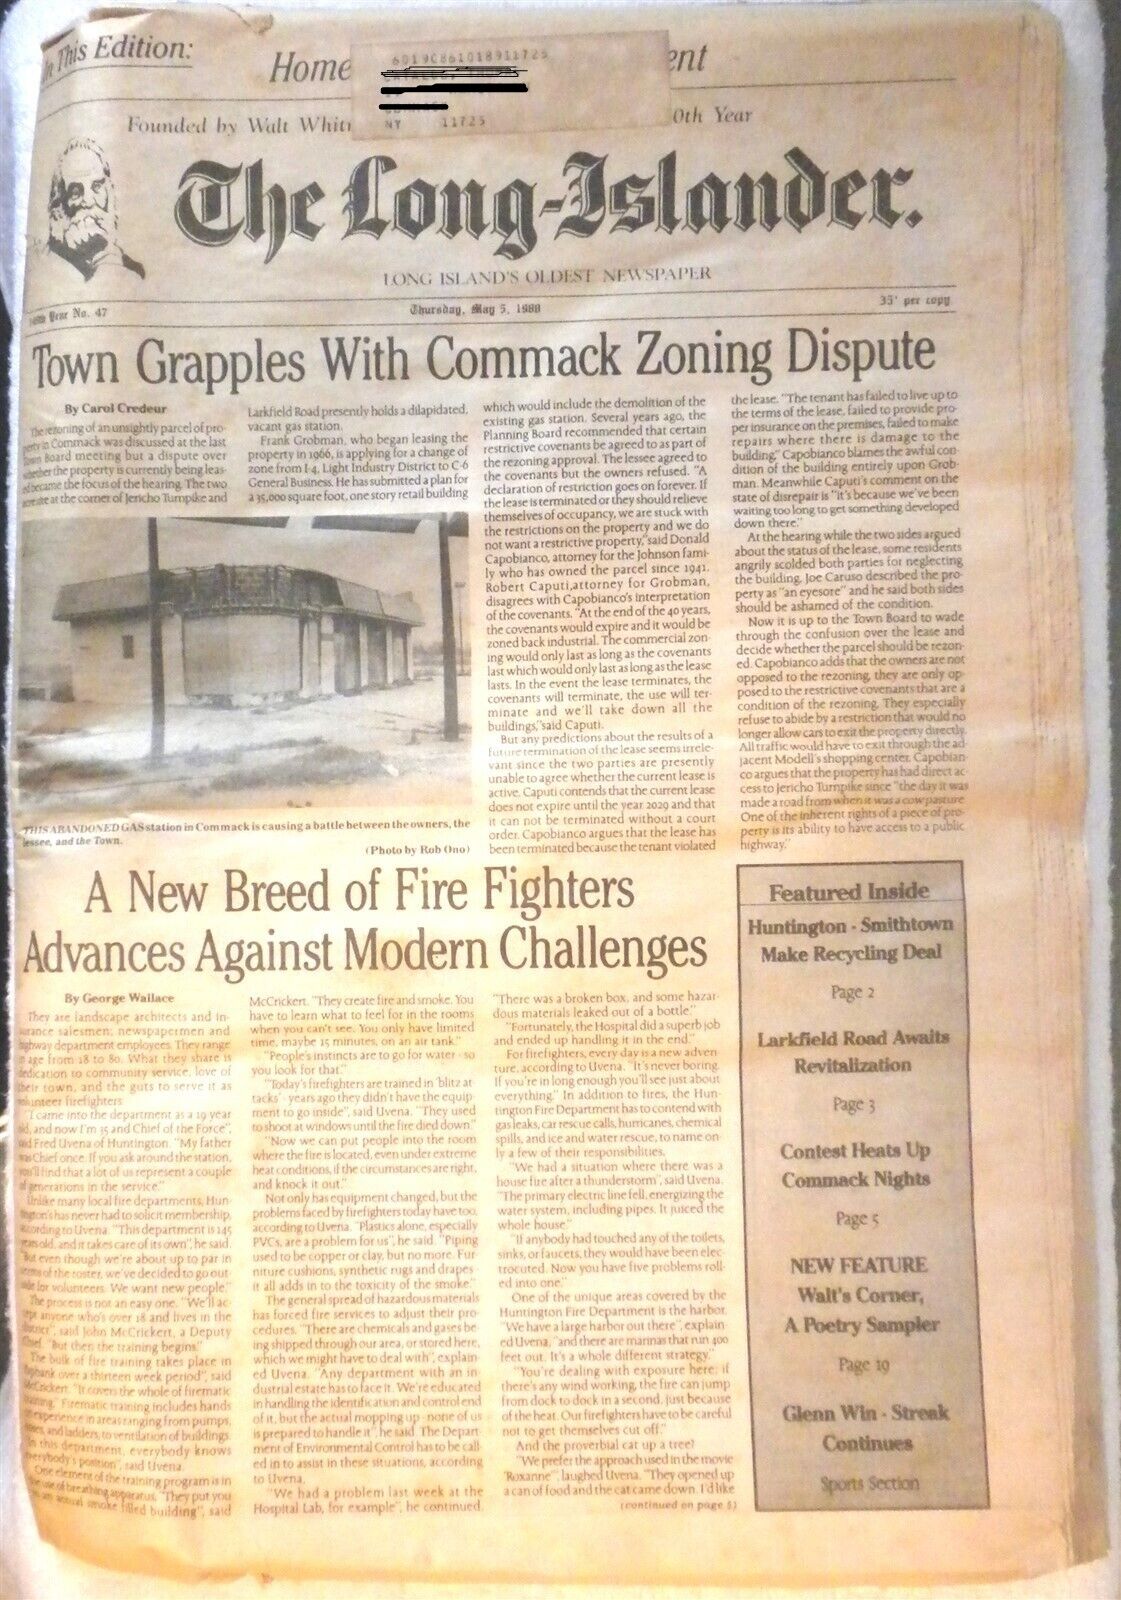 VINTAGE THE LONG ISLANDER NEWSPAPER 48 PGS MAY 5TH 1988 WALT WHITMAN'S CORNER 